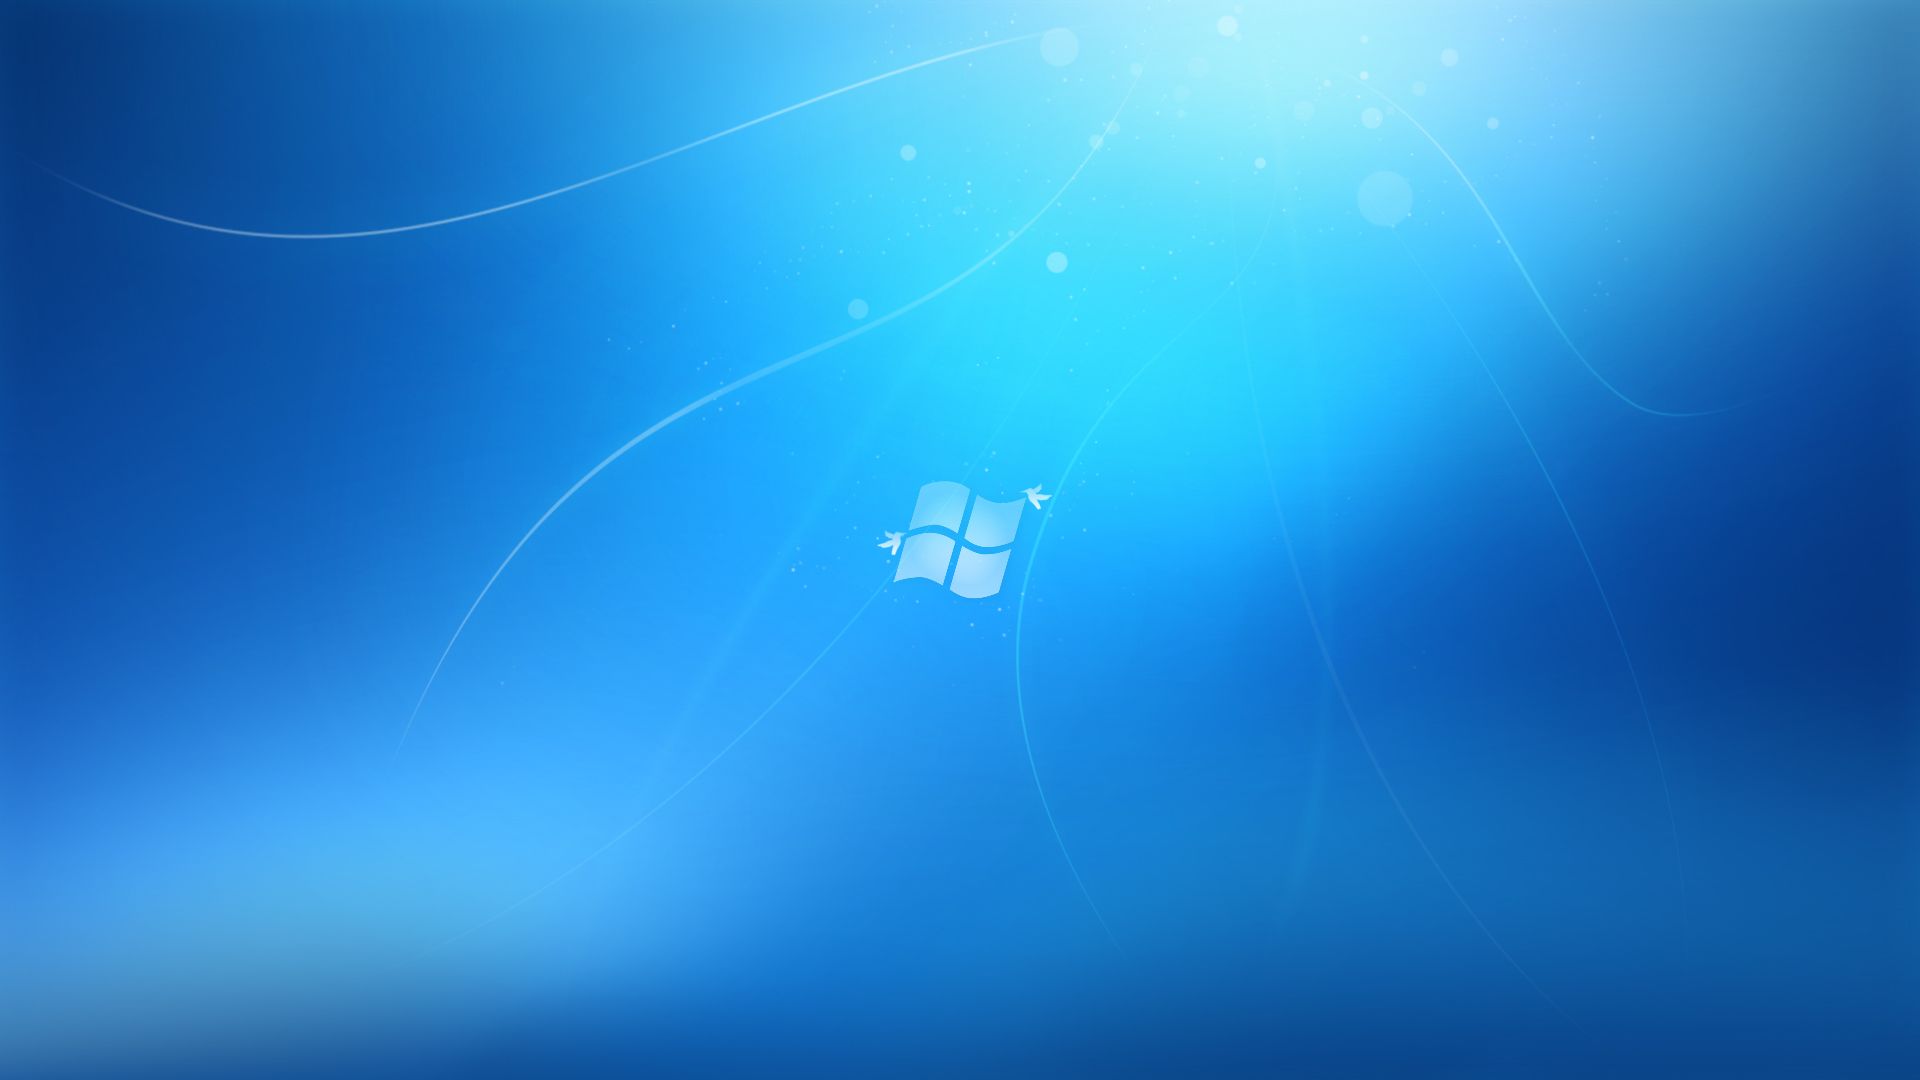 Windows 7 Blue 1080p HD Wallpapers | HD Wallpapers